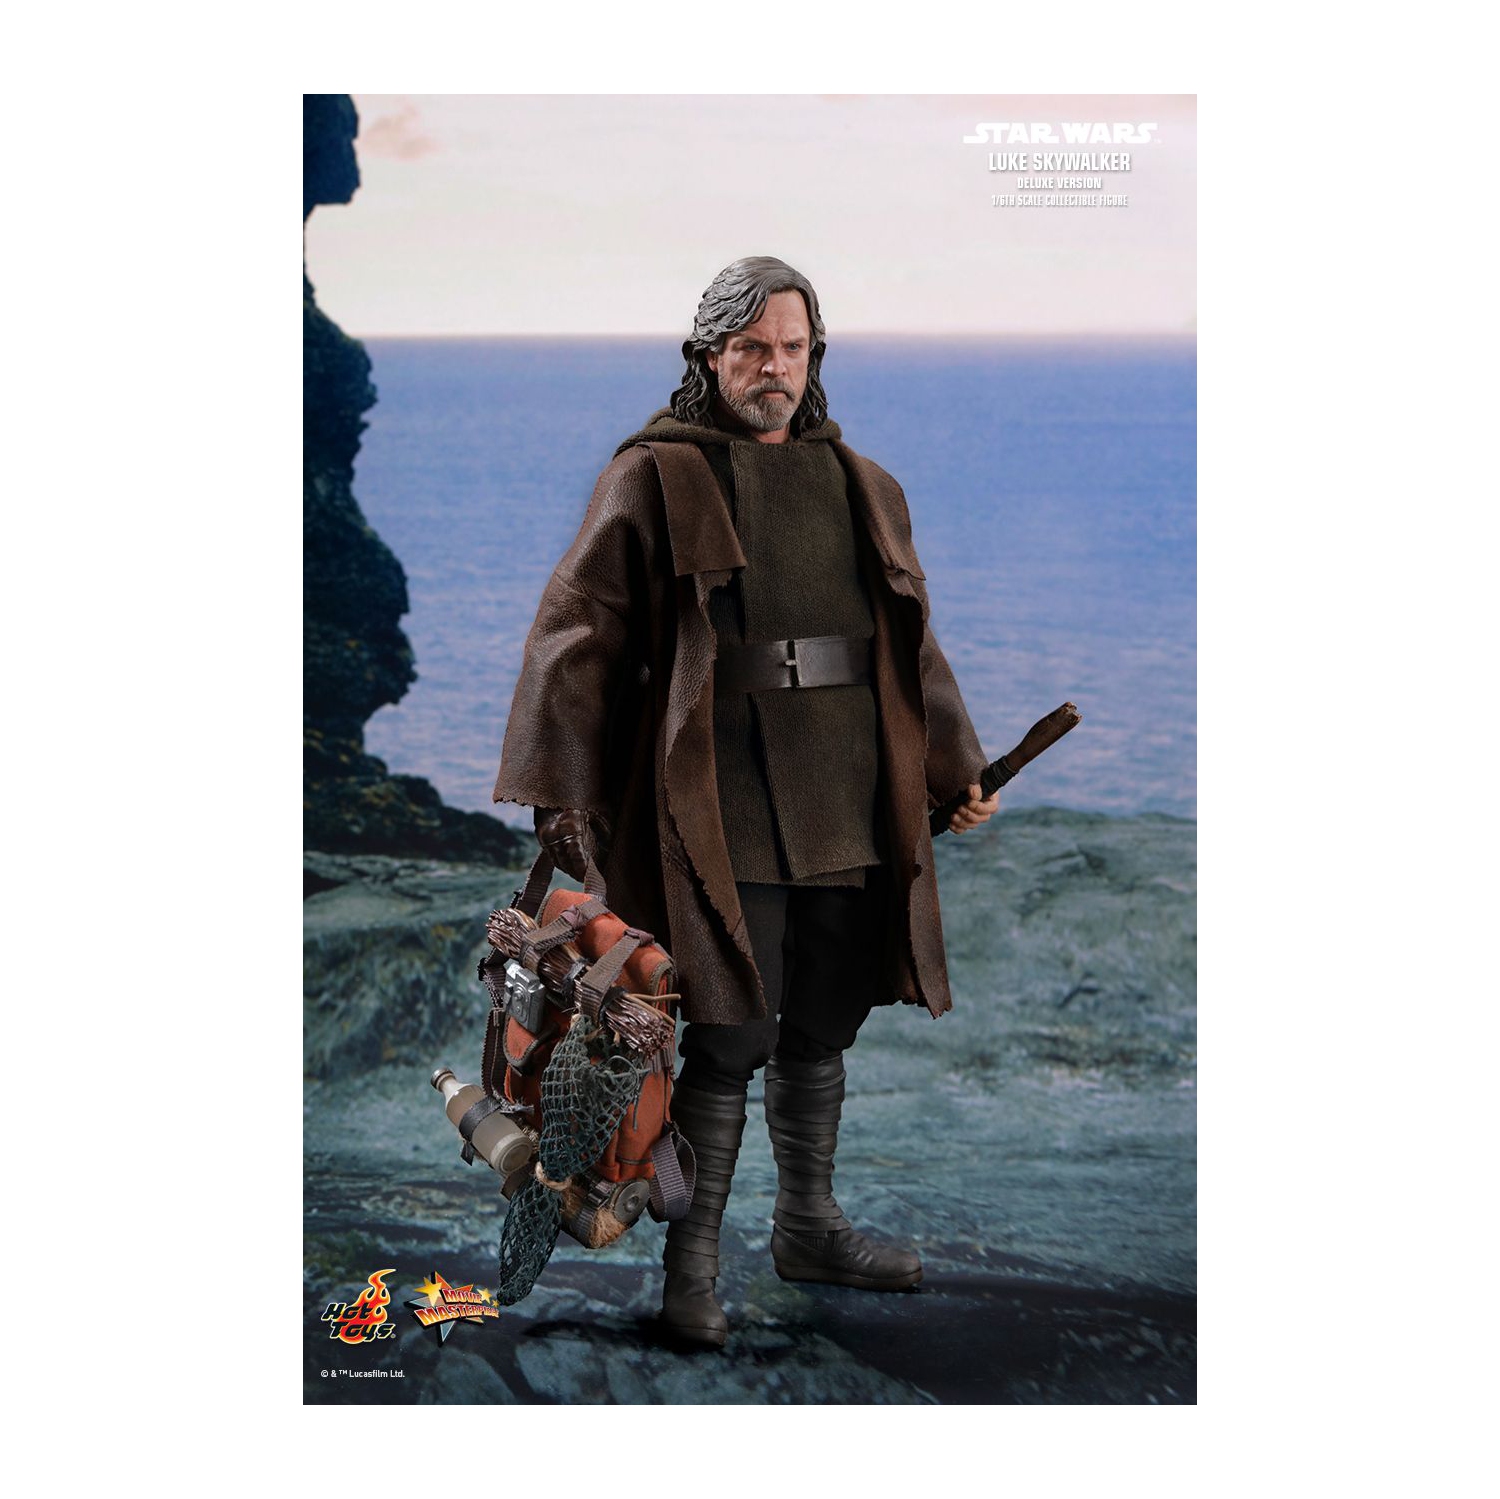 Star Wars The Last Jedi 12 Inch Action Figure Movie Masterpiece Series - Luke Skywalker Deluxe Version Hot Toys 903204